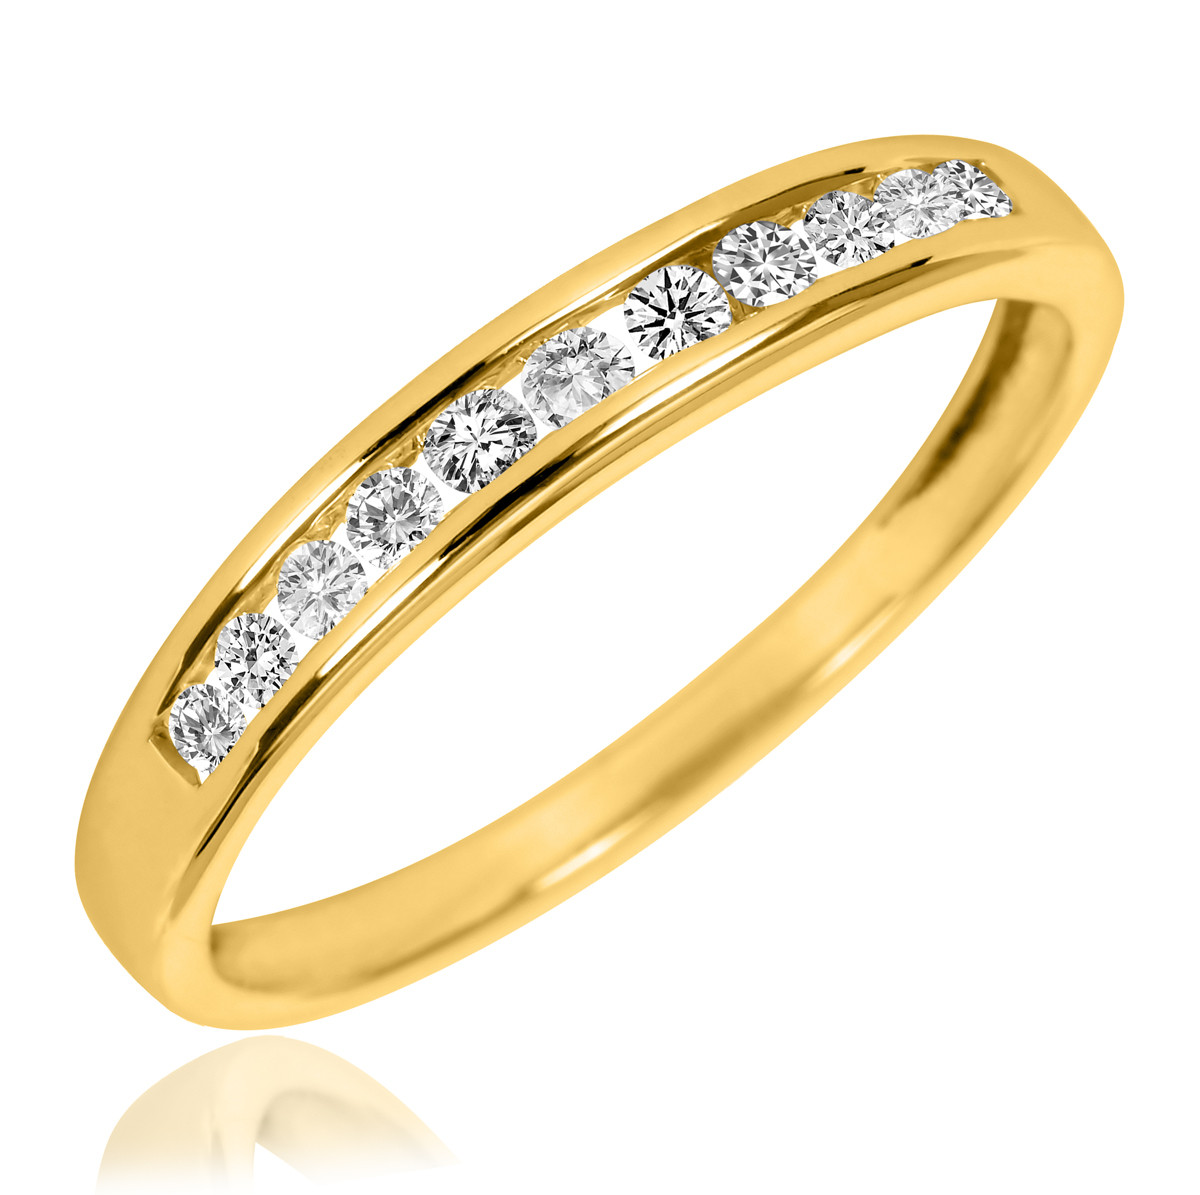 Wedding Rings Yellow Gold
 1 CT T W Diamond Women s Bridal Wedding Ring Set 14K